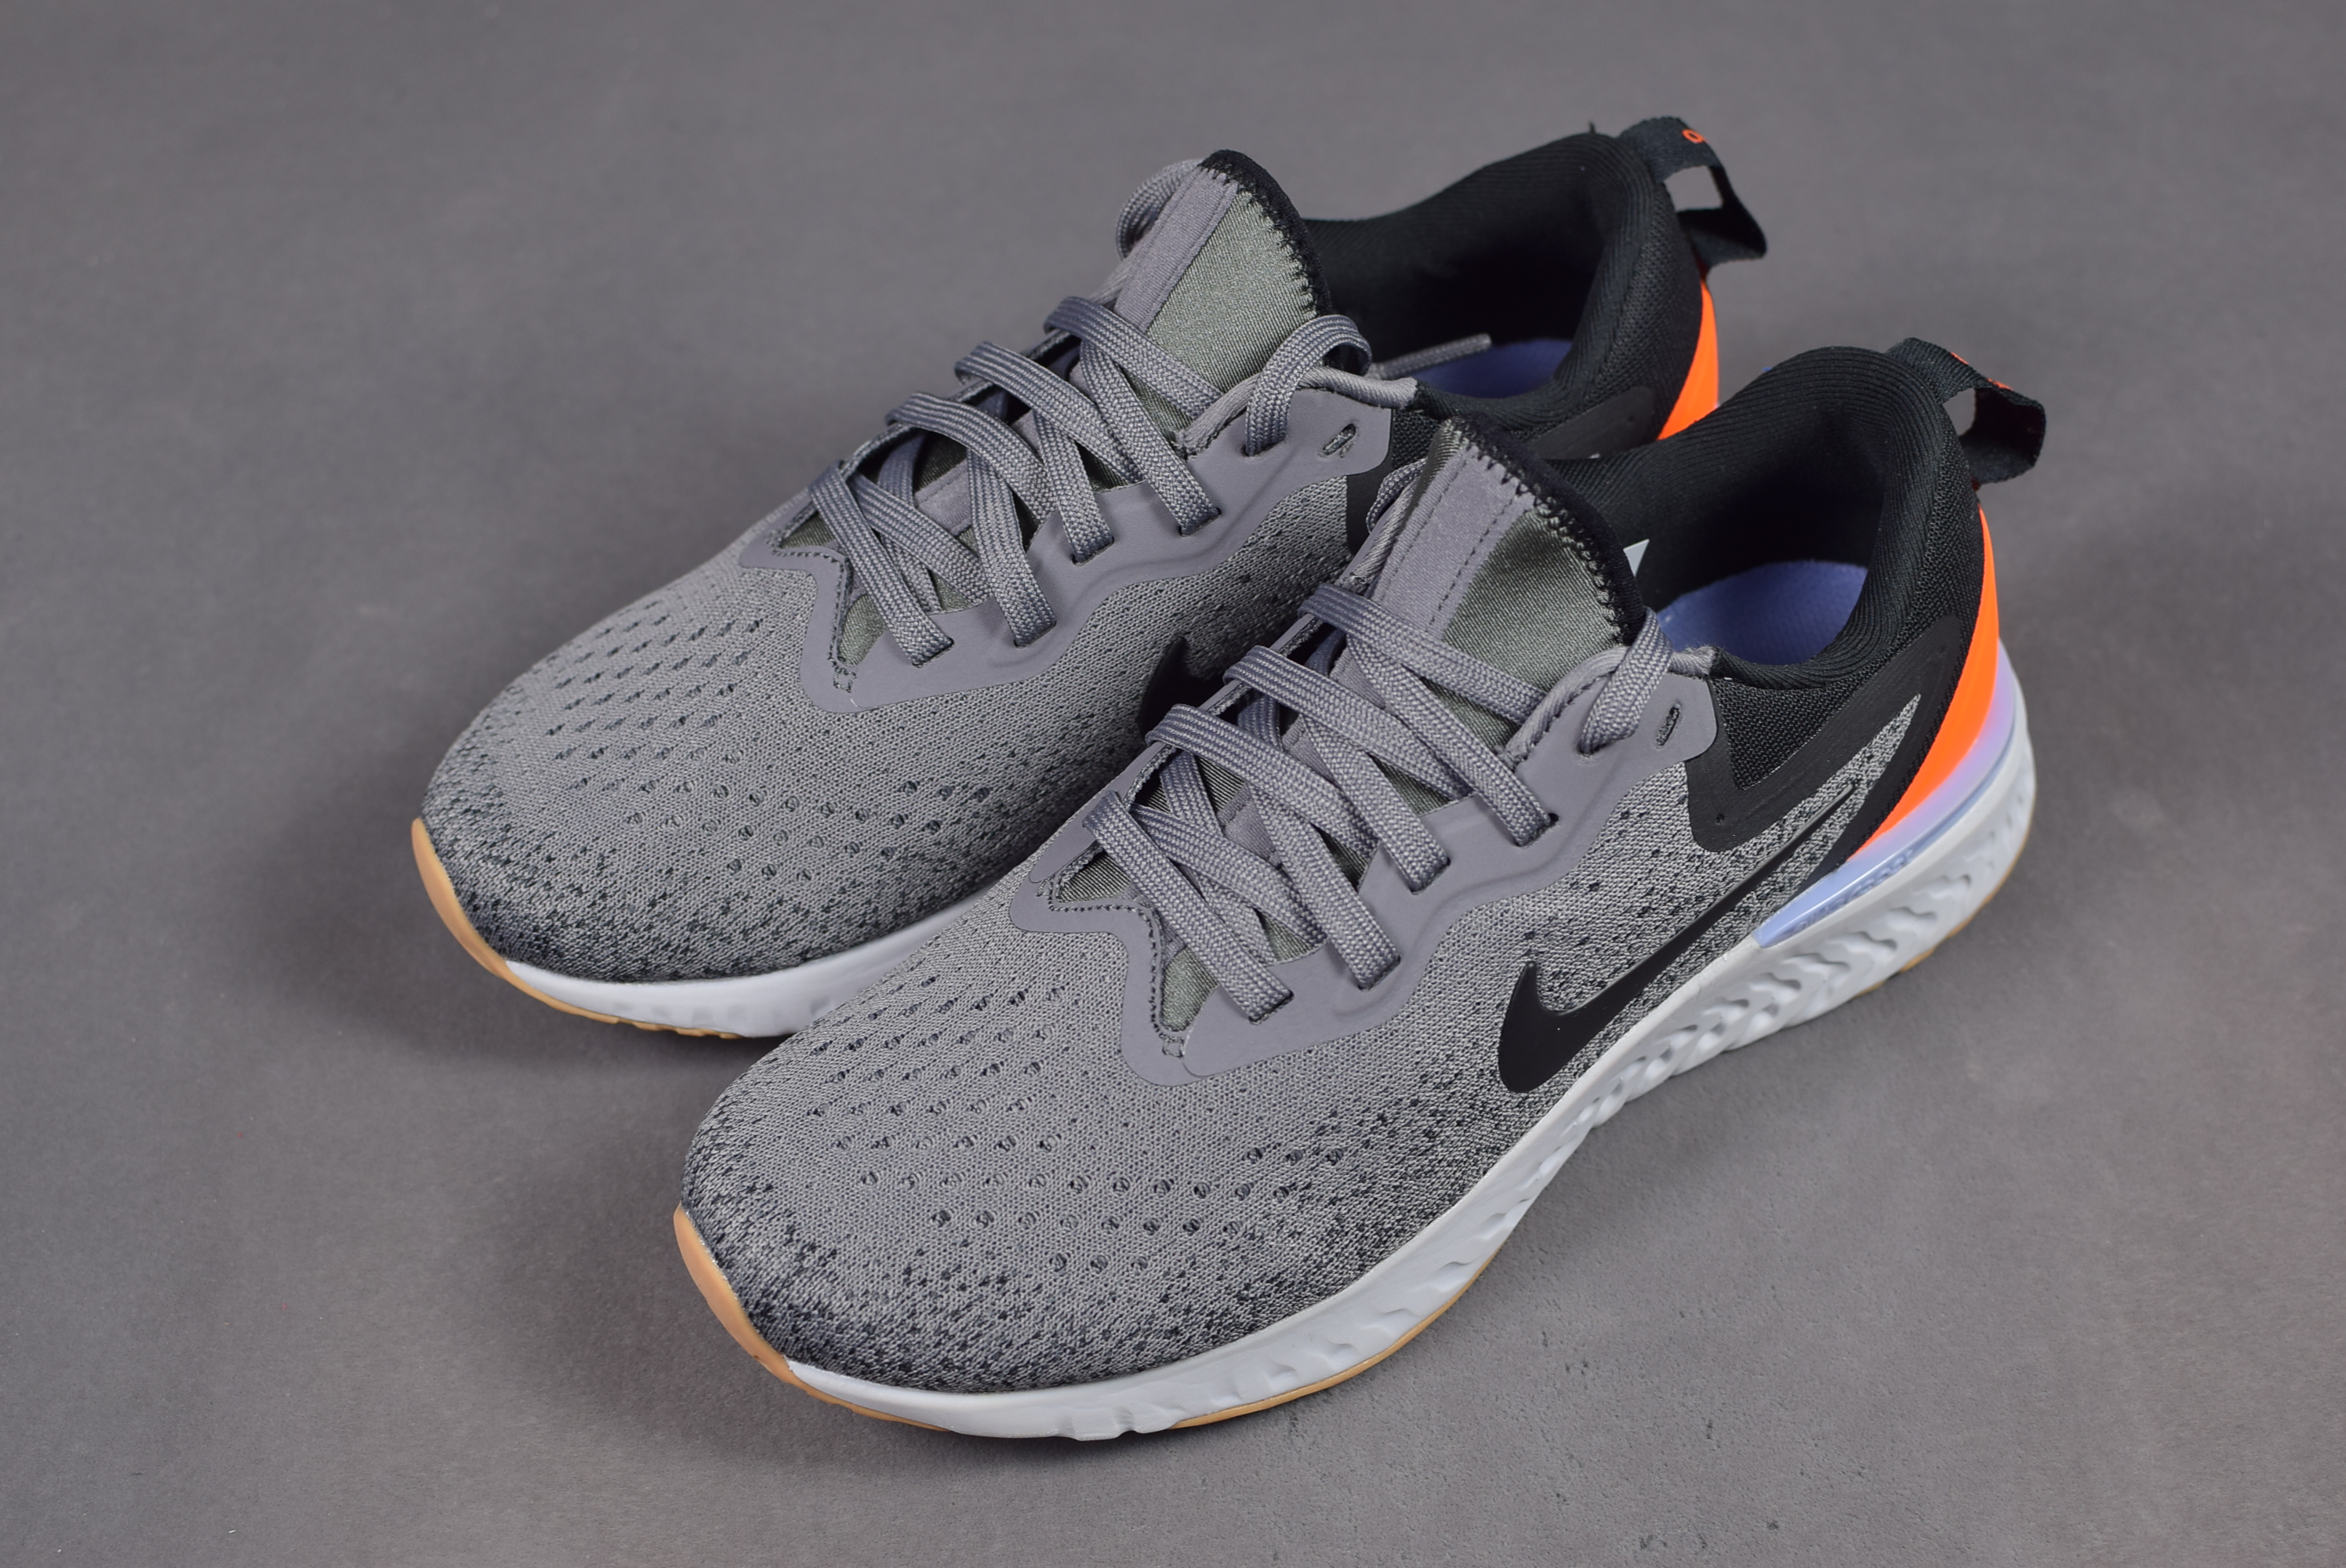 Nike Odyssey React Grey Black Orange Shoes